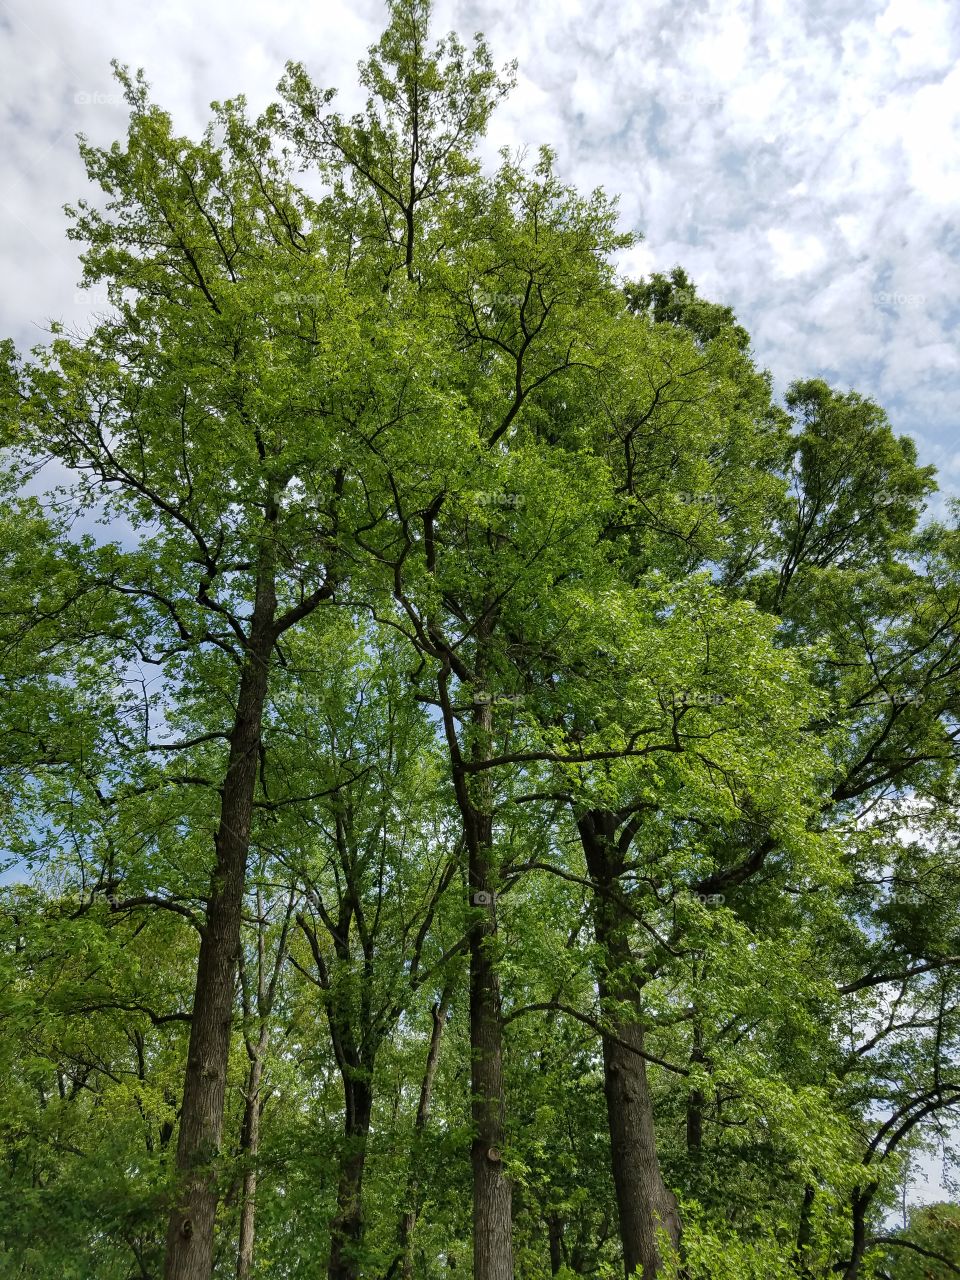 Trees Rule the Sky